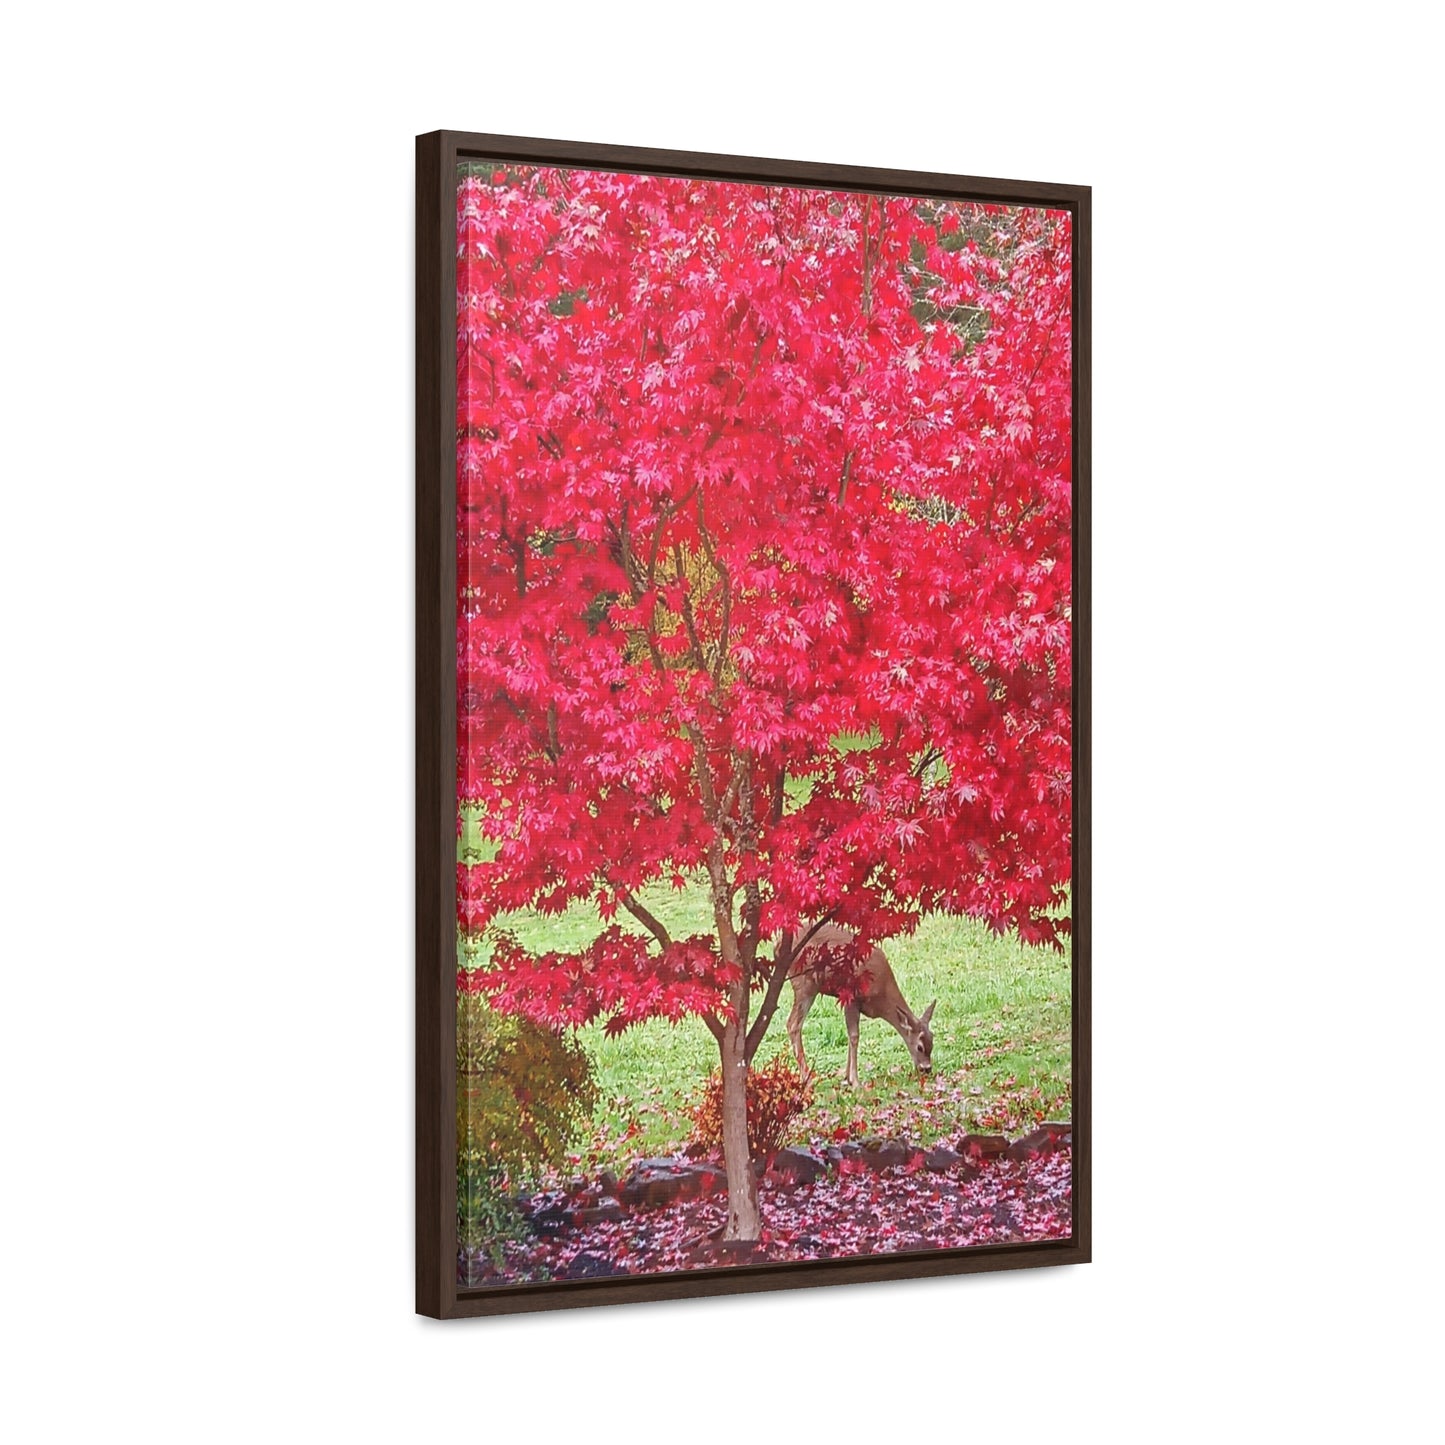 Autumn Deer Gallery Canvas Wraps Framed